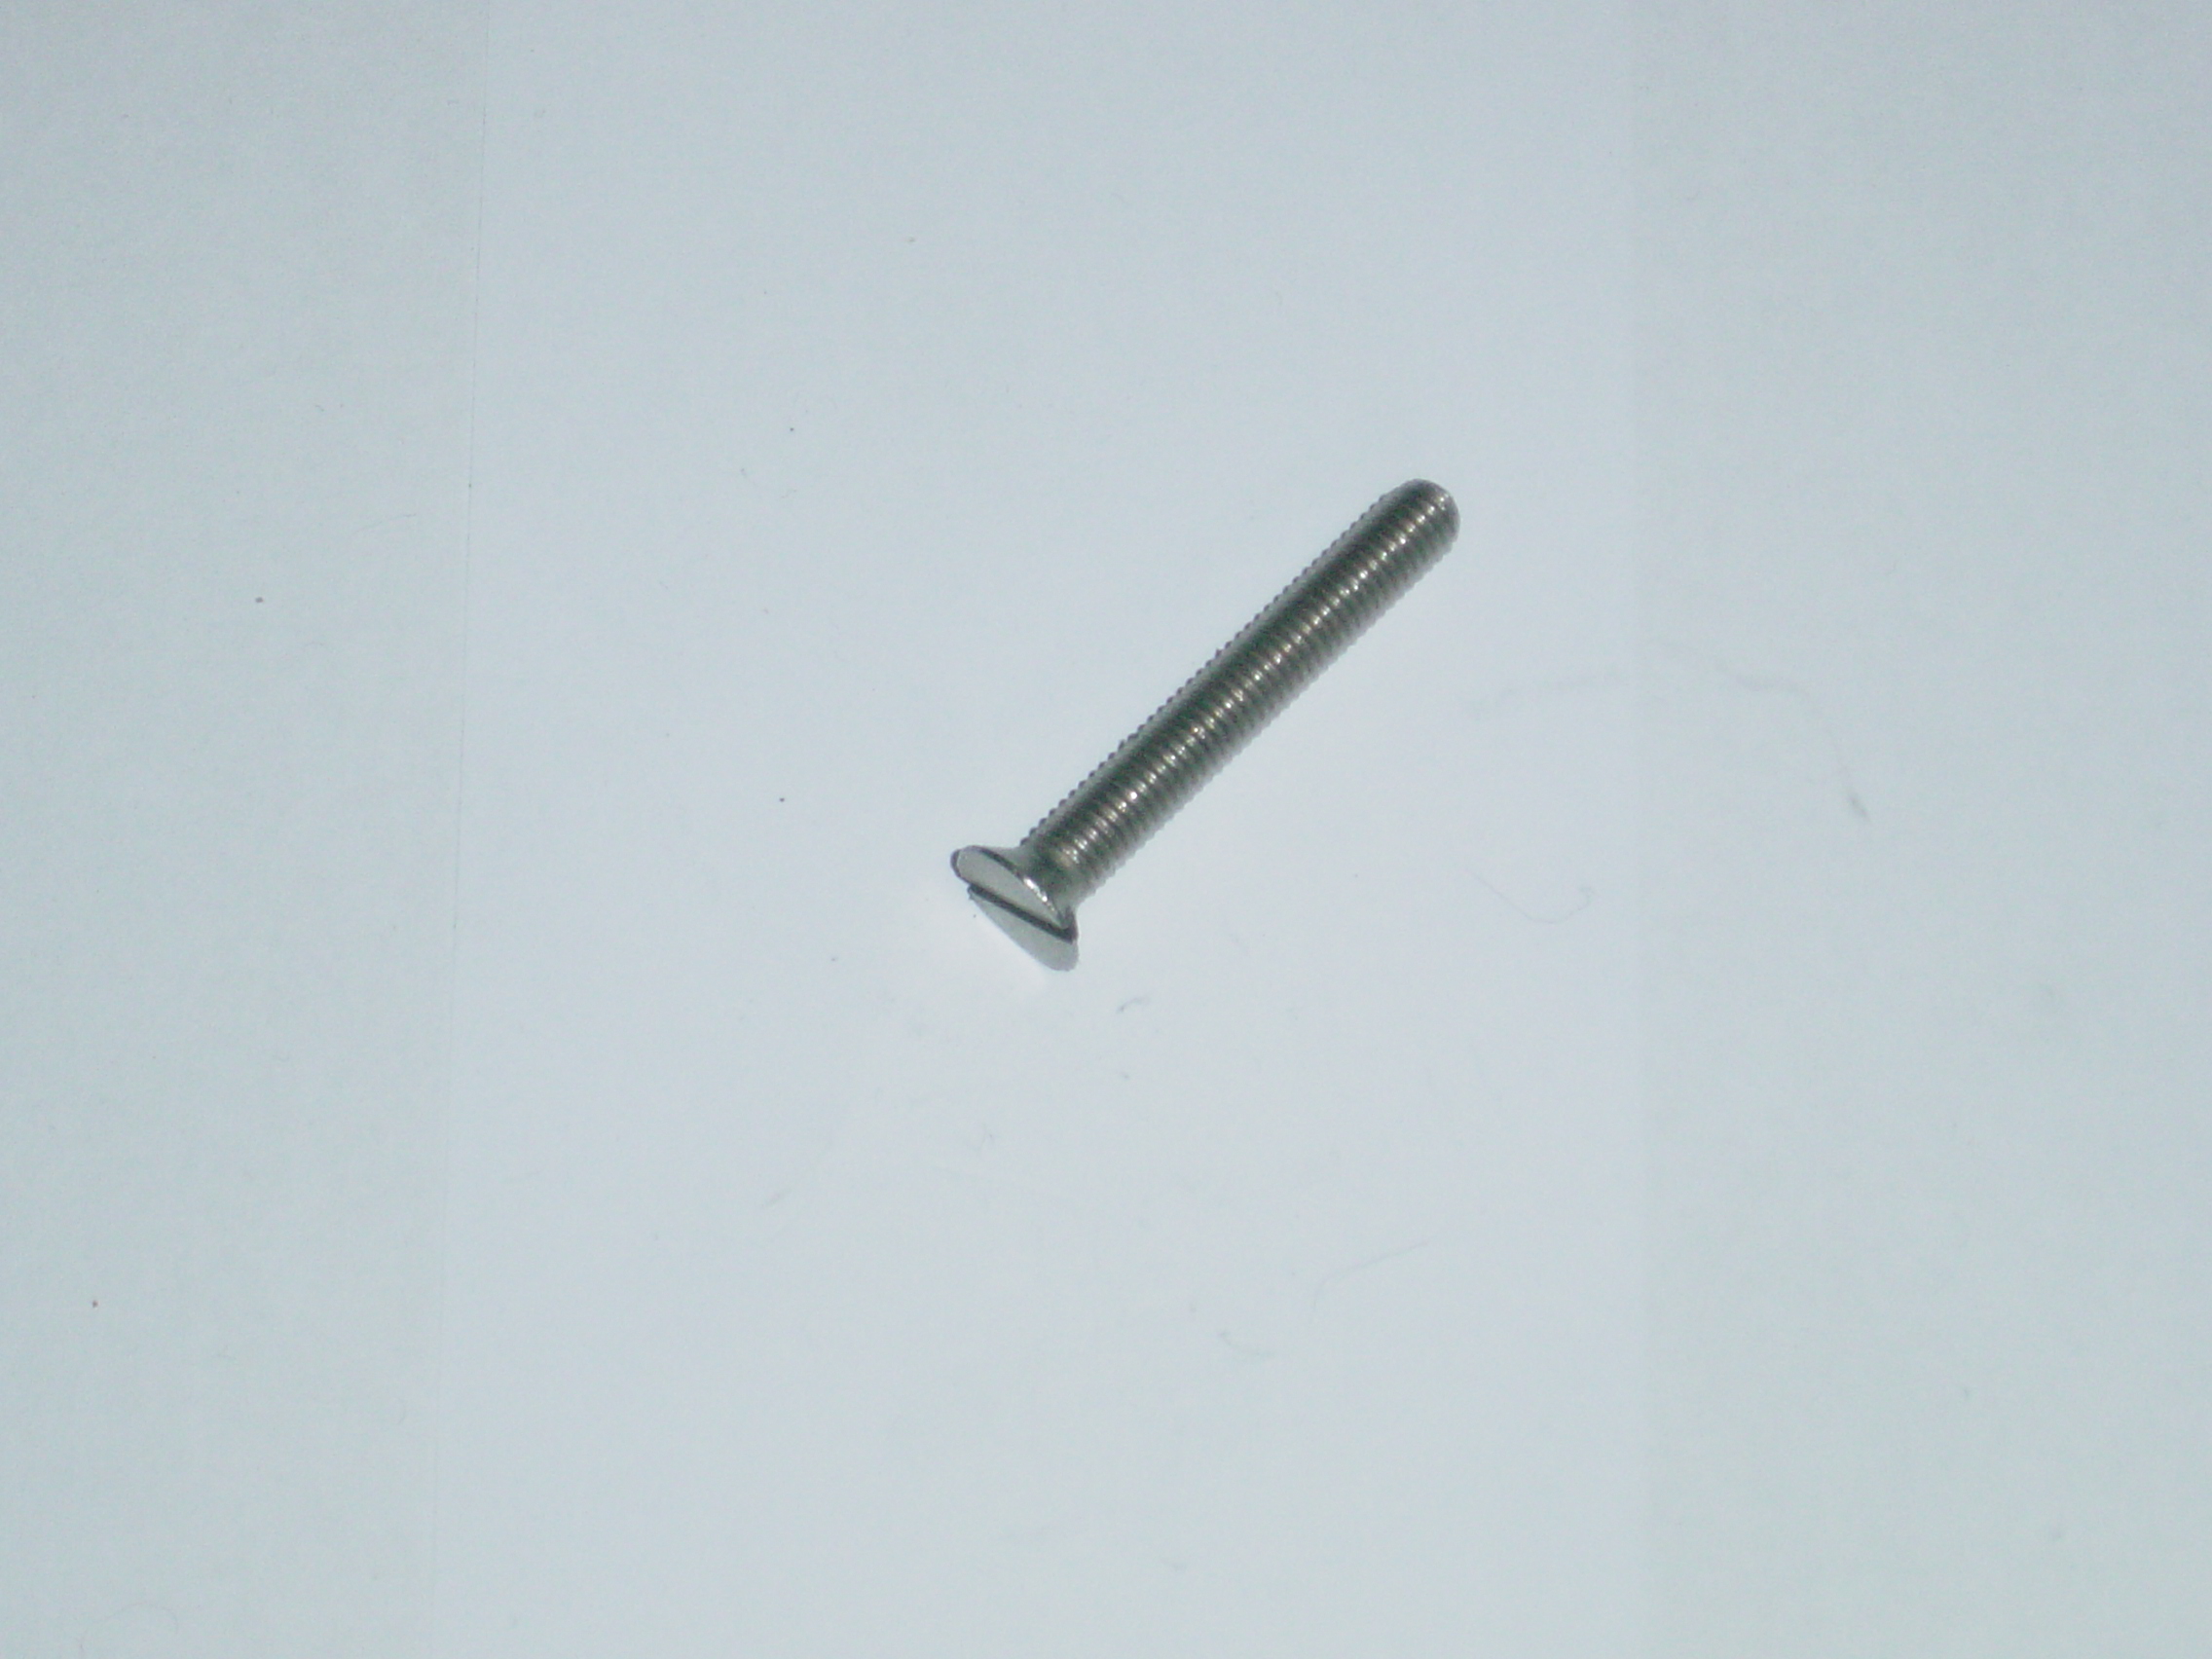 Flat-headed countersunk bolt AM 5 x 30